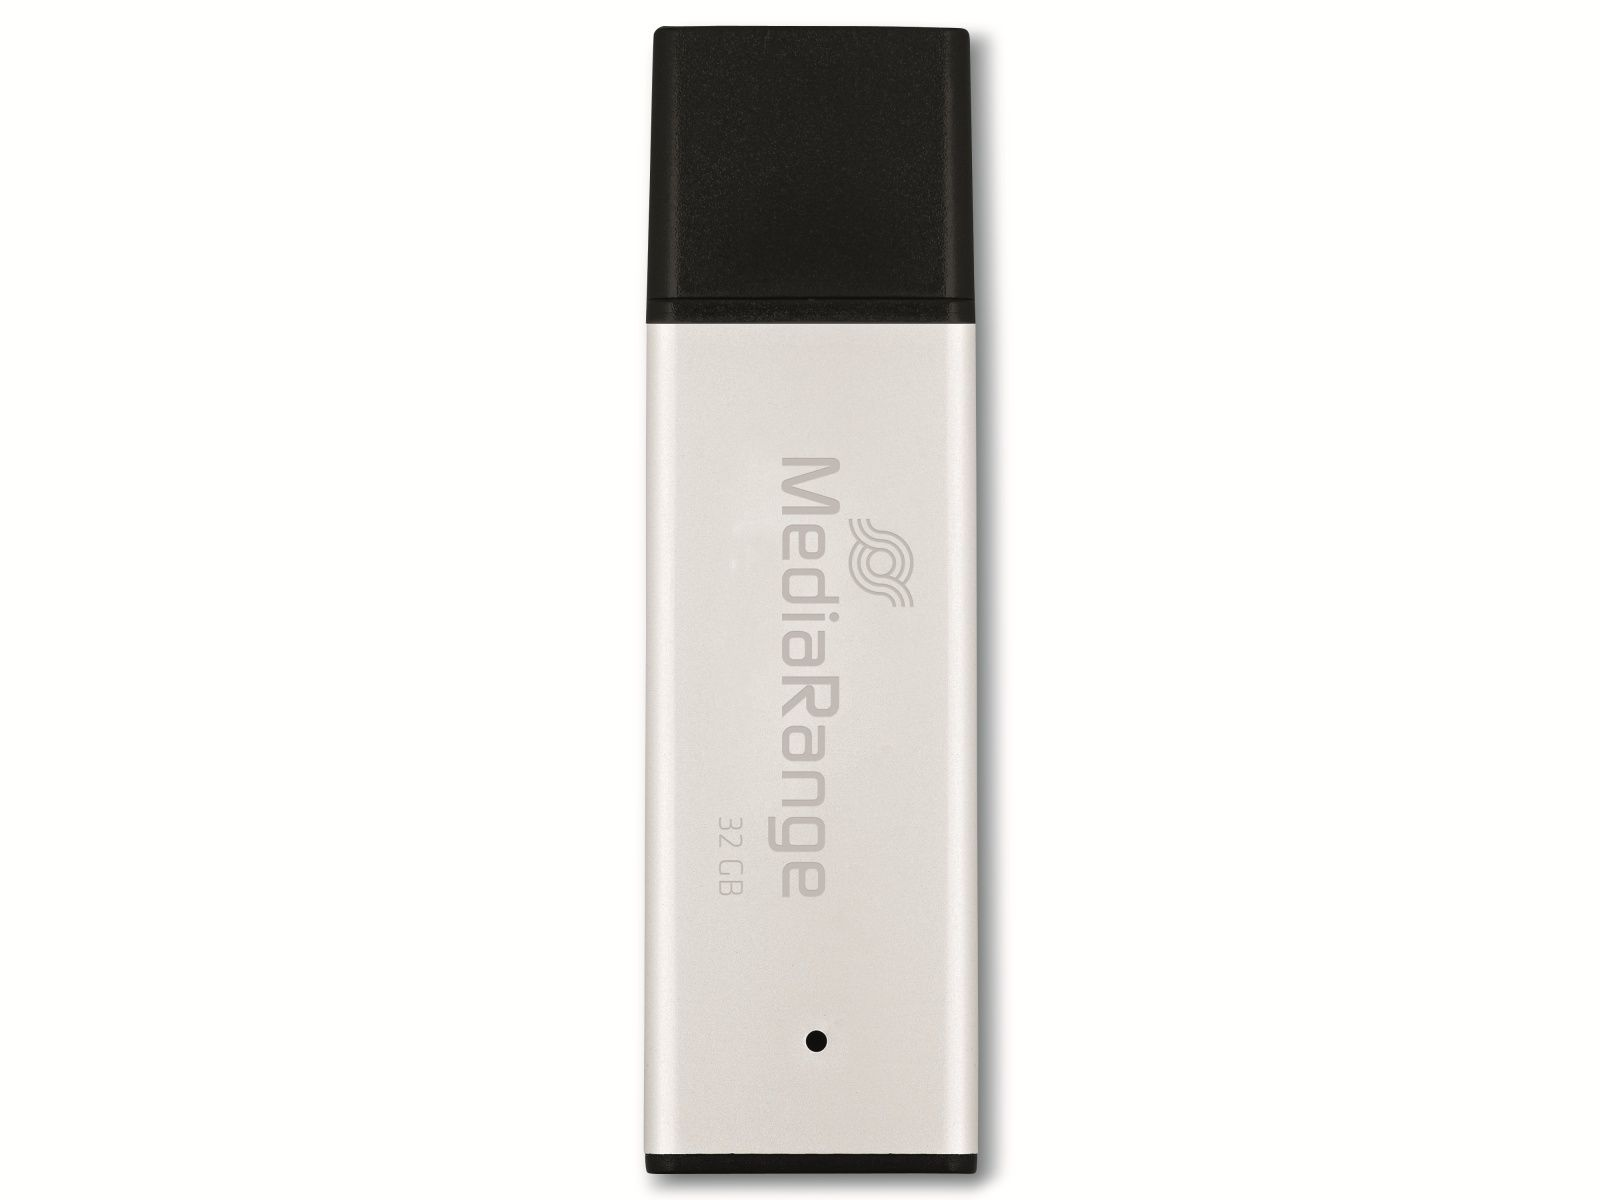 GB) USB-Stick GB 32 32 MEDIARANGE USB-Stick (schwarz/silber, USB 3.0, MR1900,